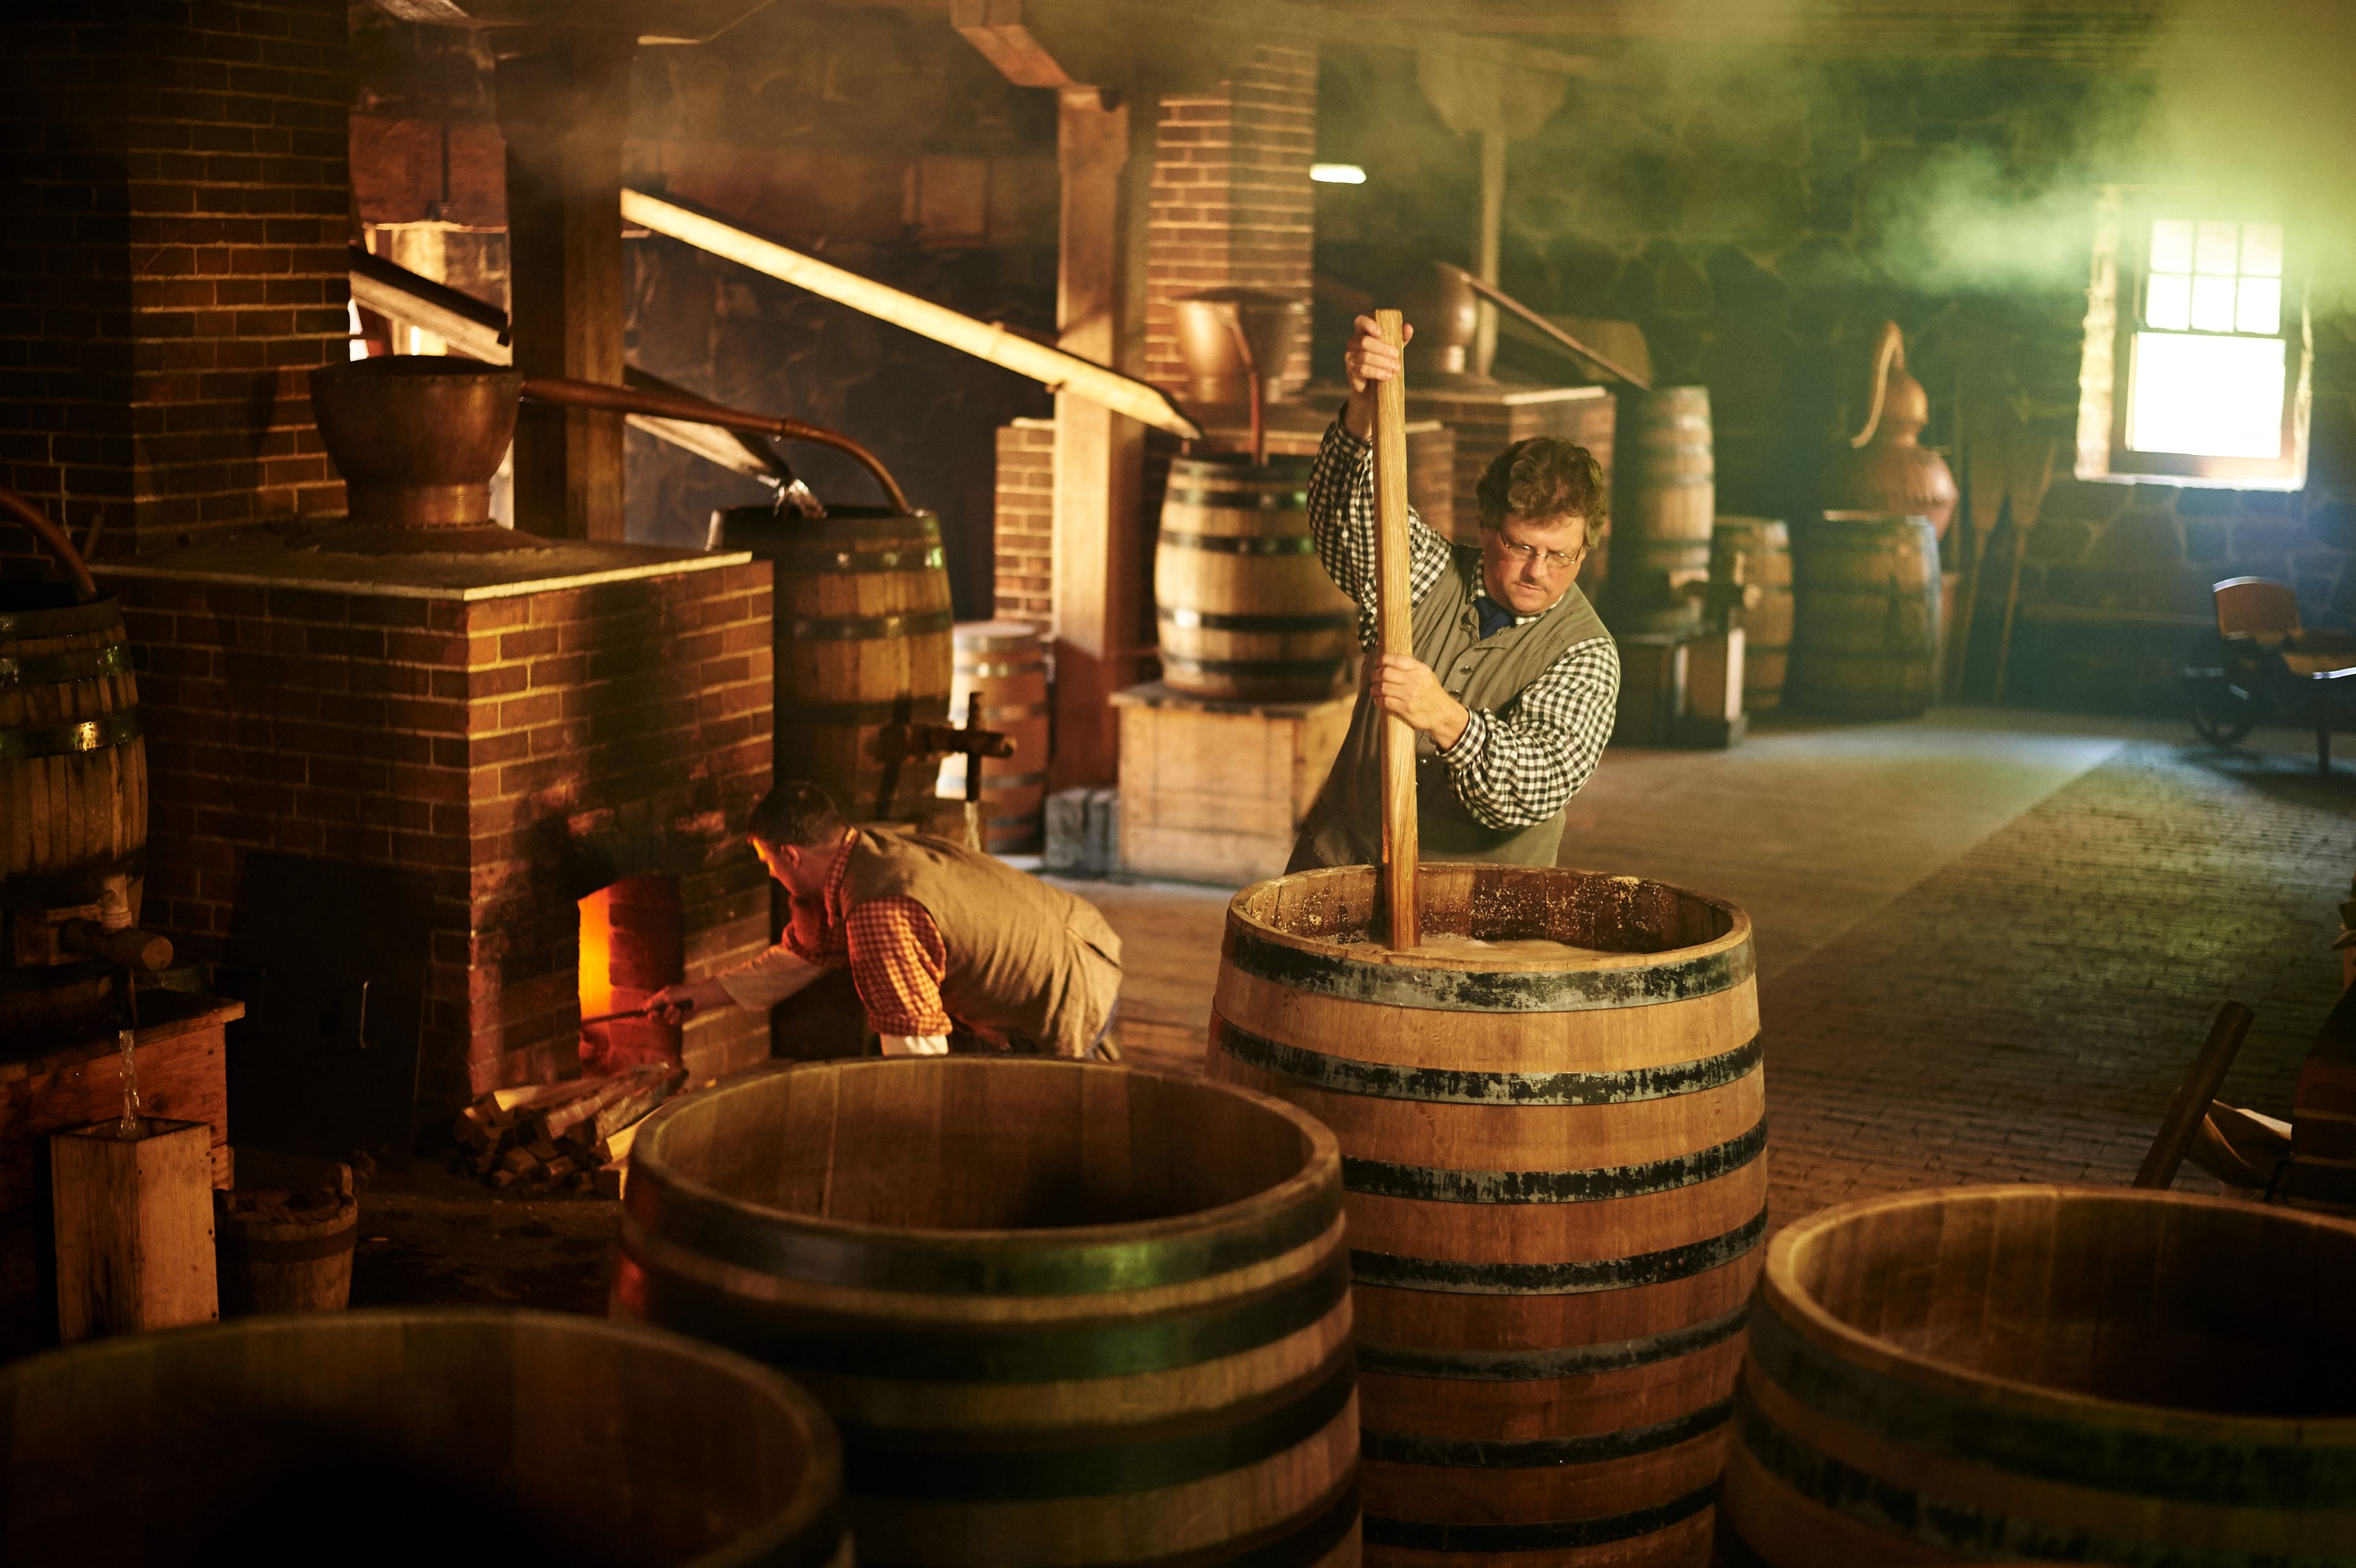 Mount Vernon Whiskey Distillery